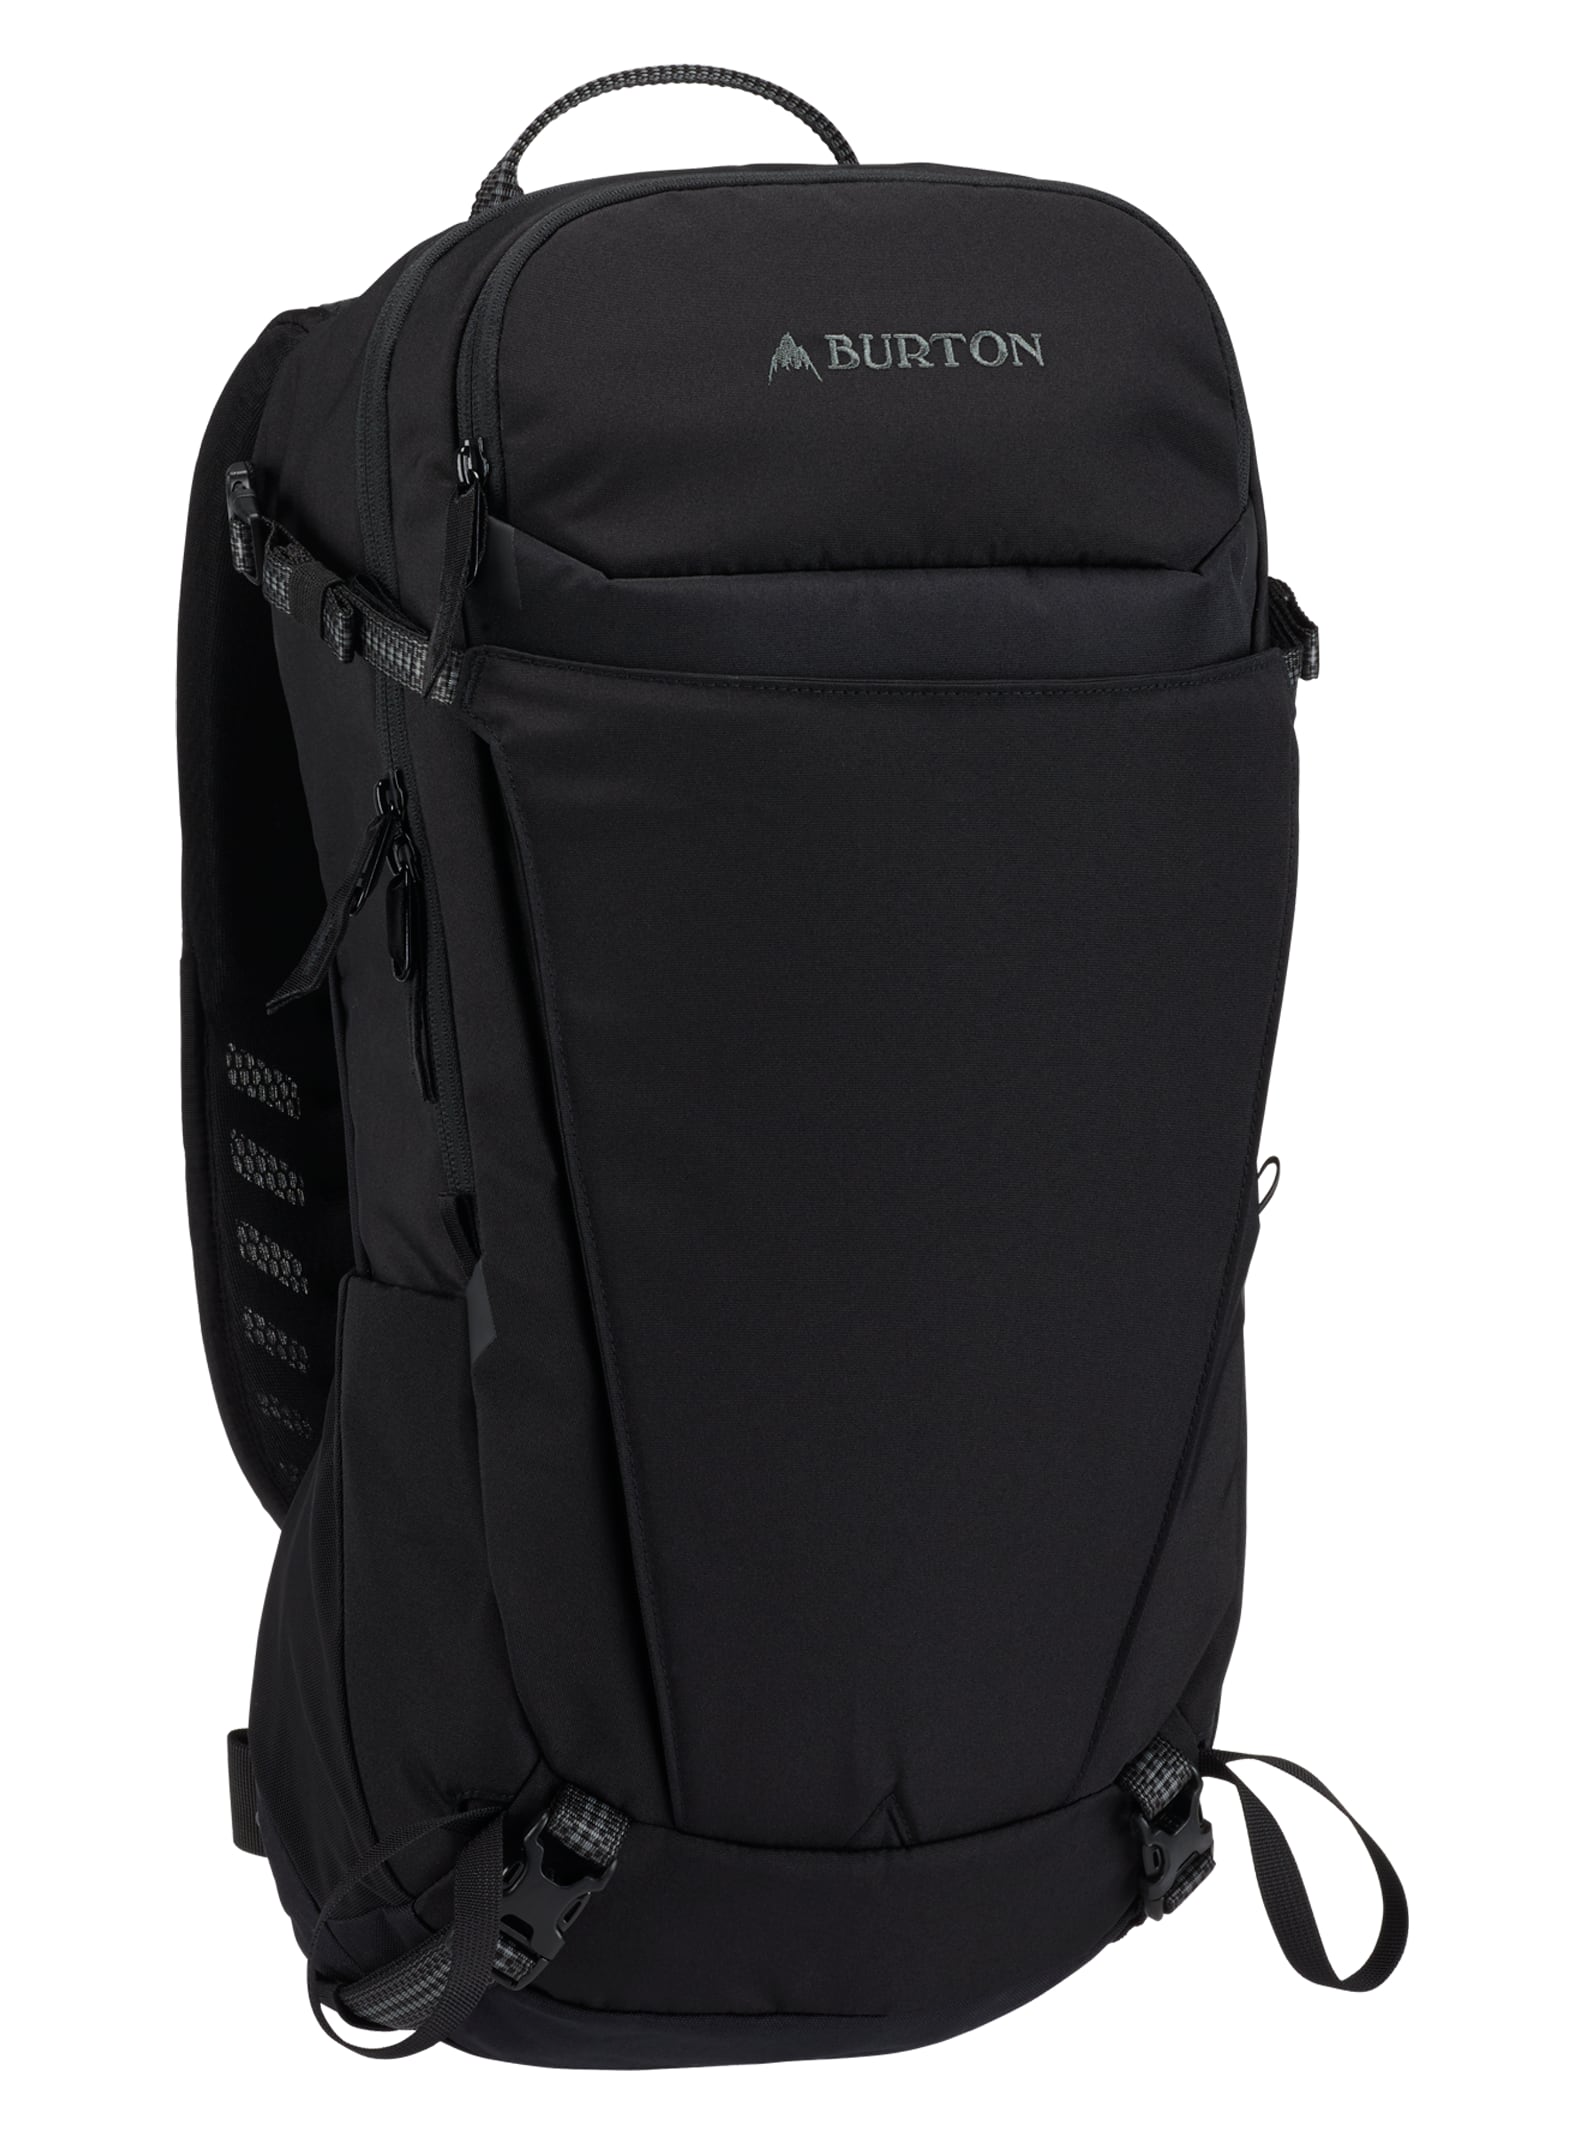 Burton Skyward 18L Backpack | Burton.com Spring 2020 US